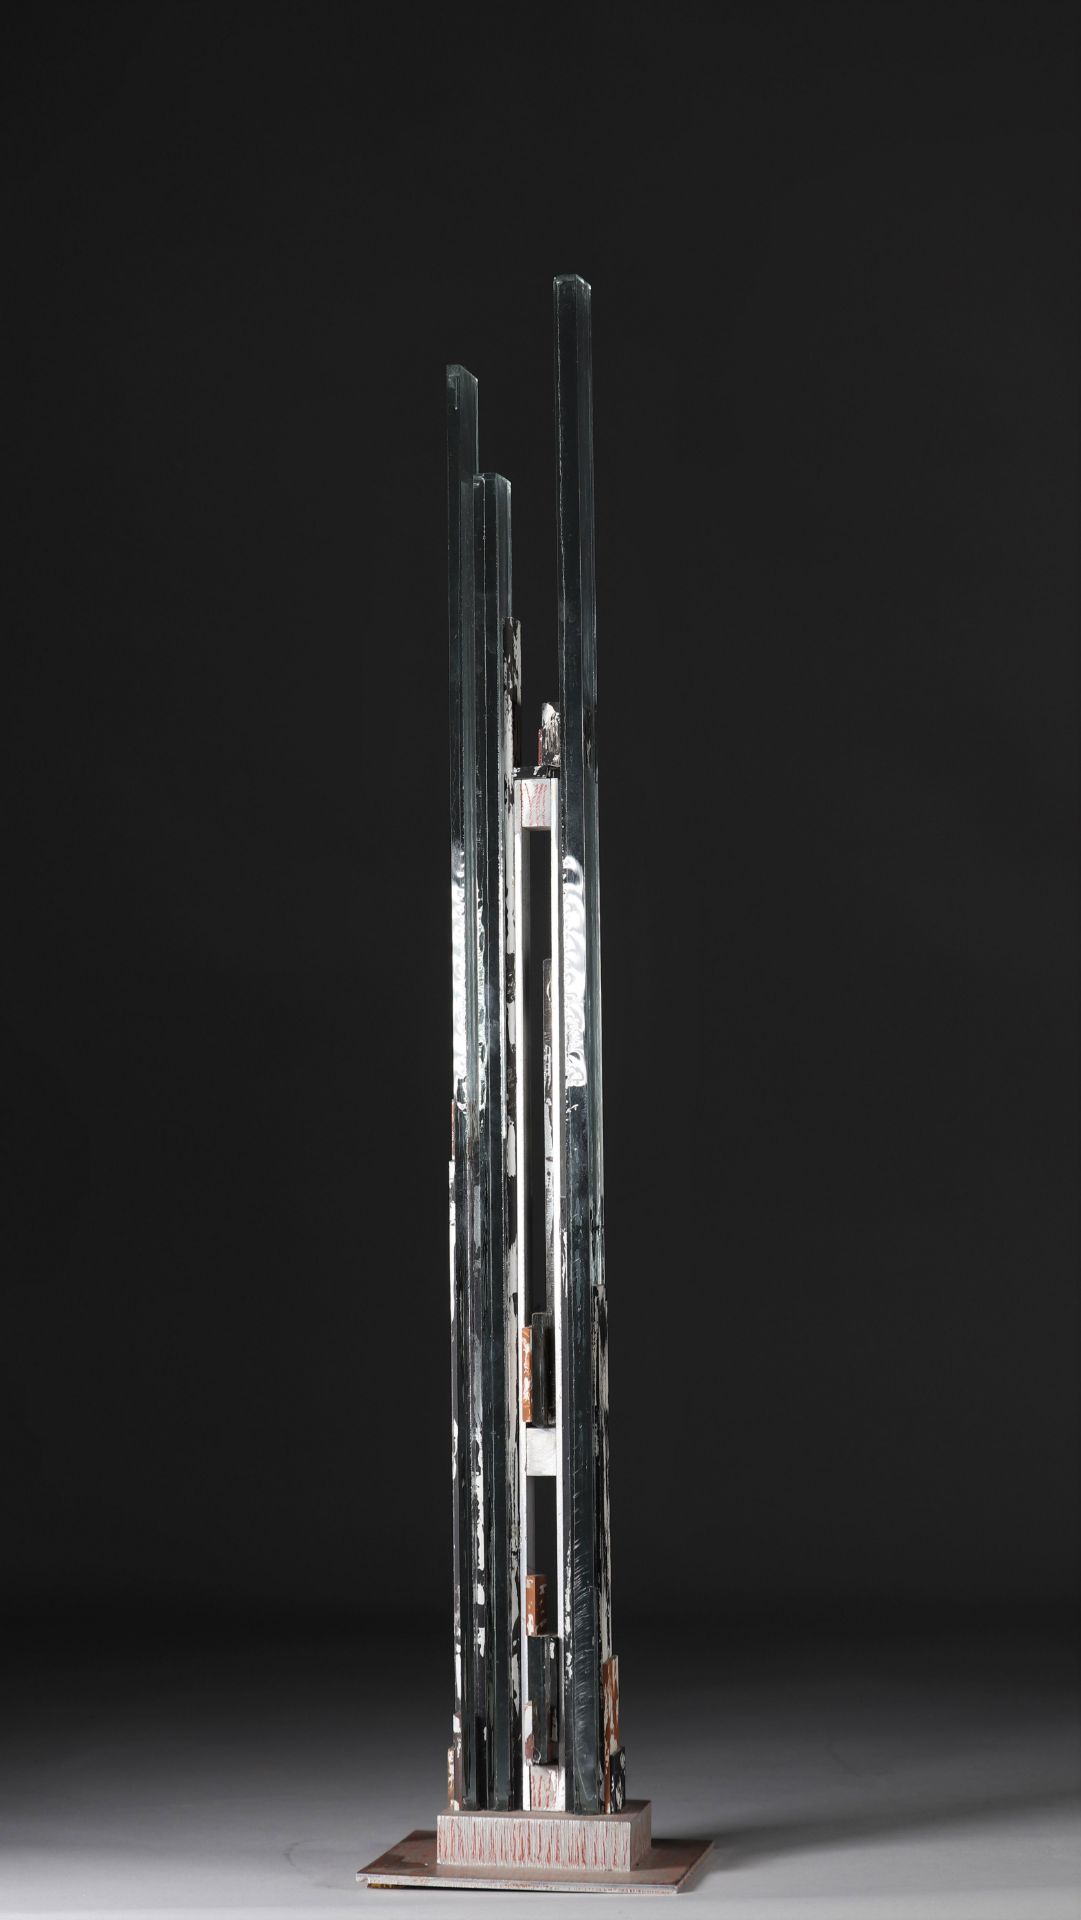 Gerard Koch (1926 - 2014) sculpture "clearing" metal, wood, glass - Image 4 of 5